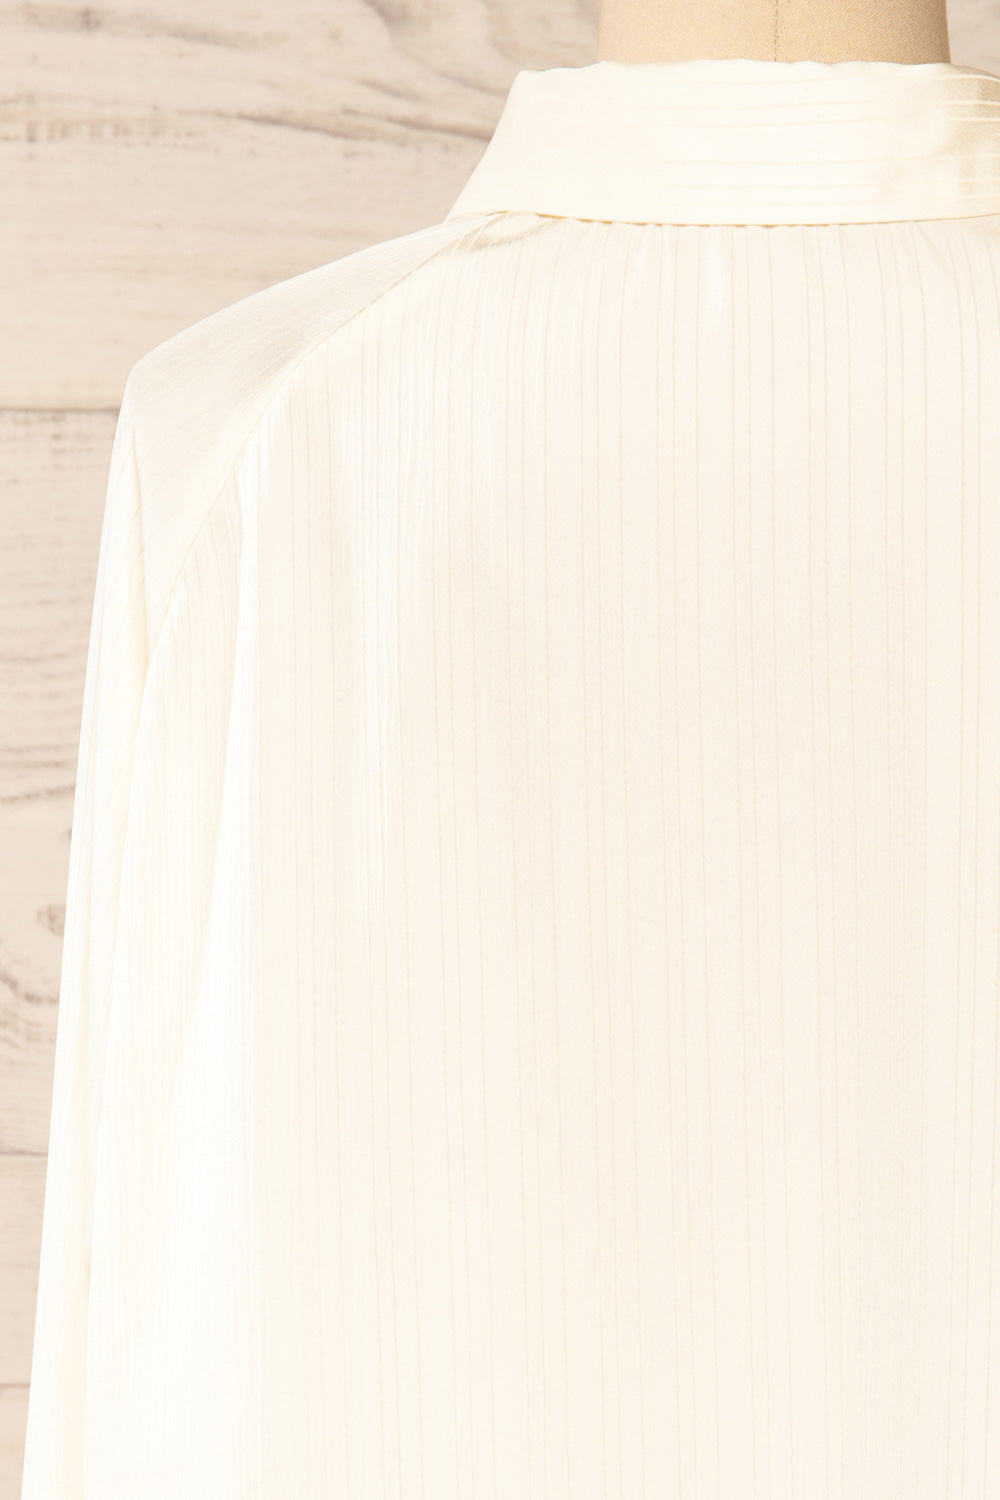 Sheffield Monochrome Striped Satin Shirt | La petite garçonne back close-up